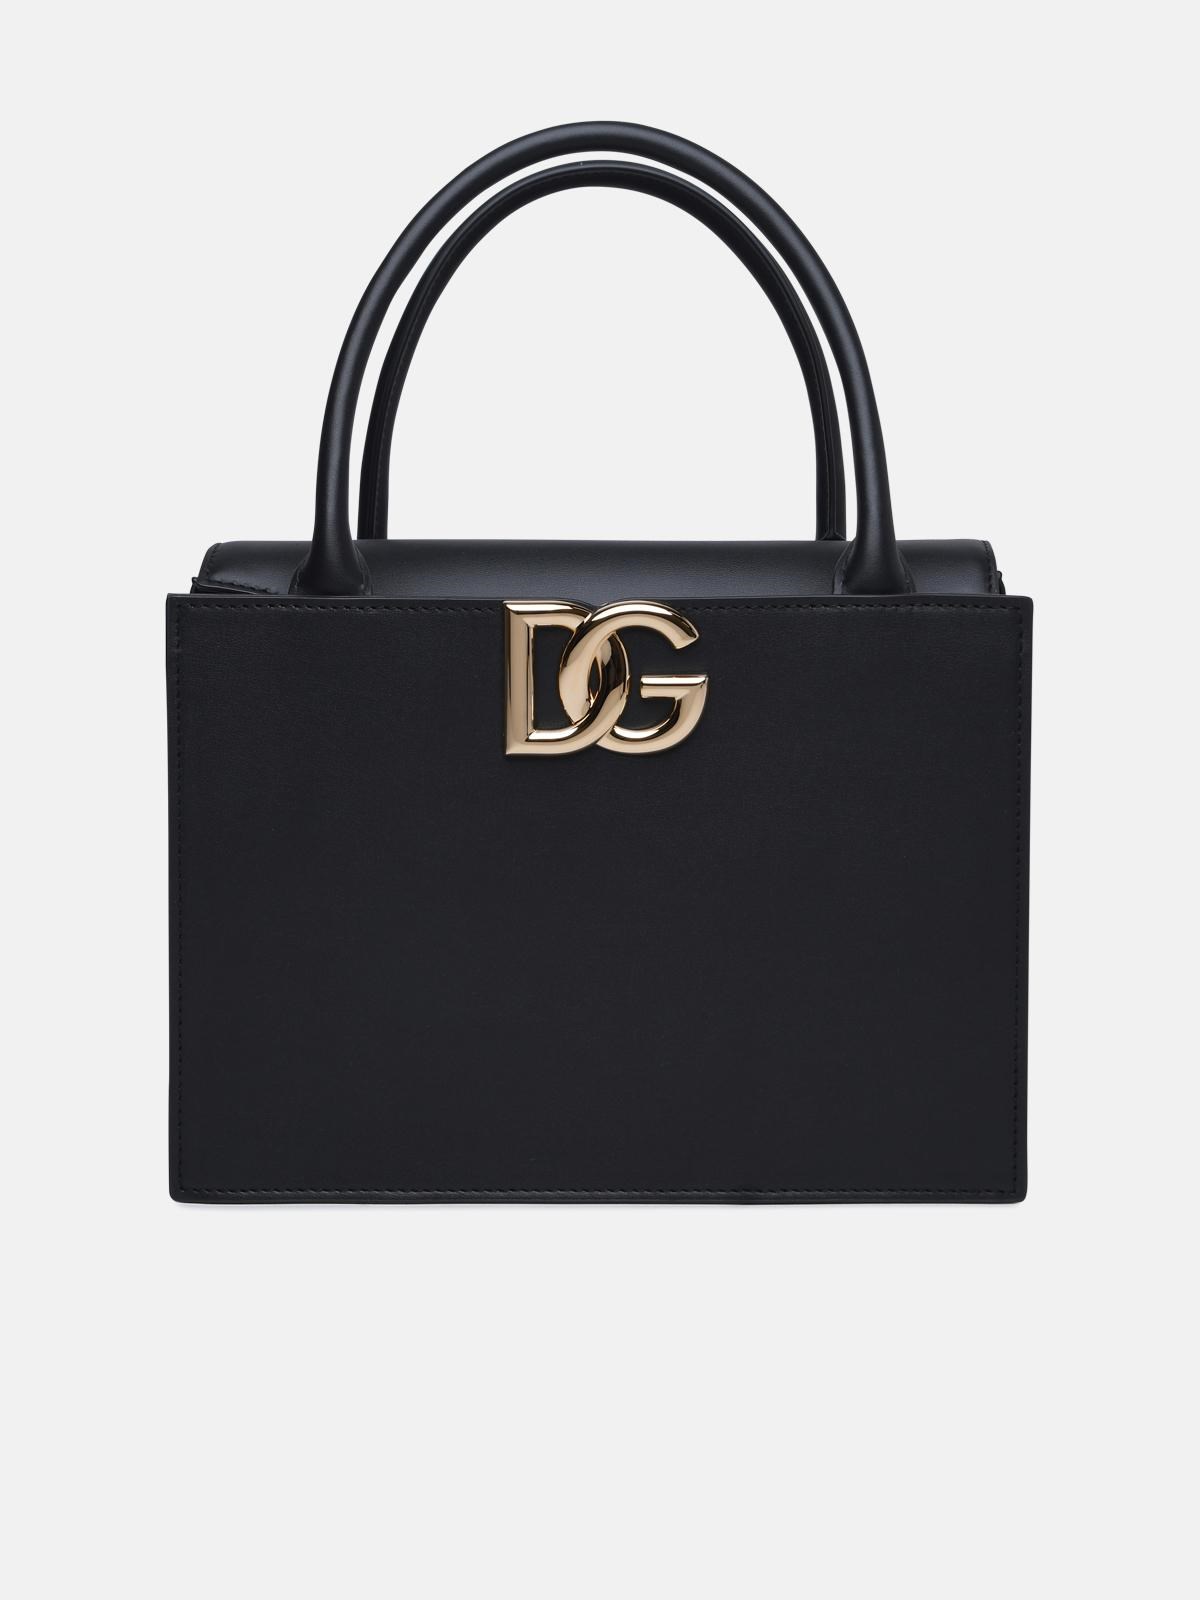 Dolce & Gabbana Black Calf Leather Handbag